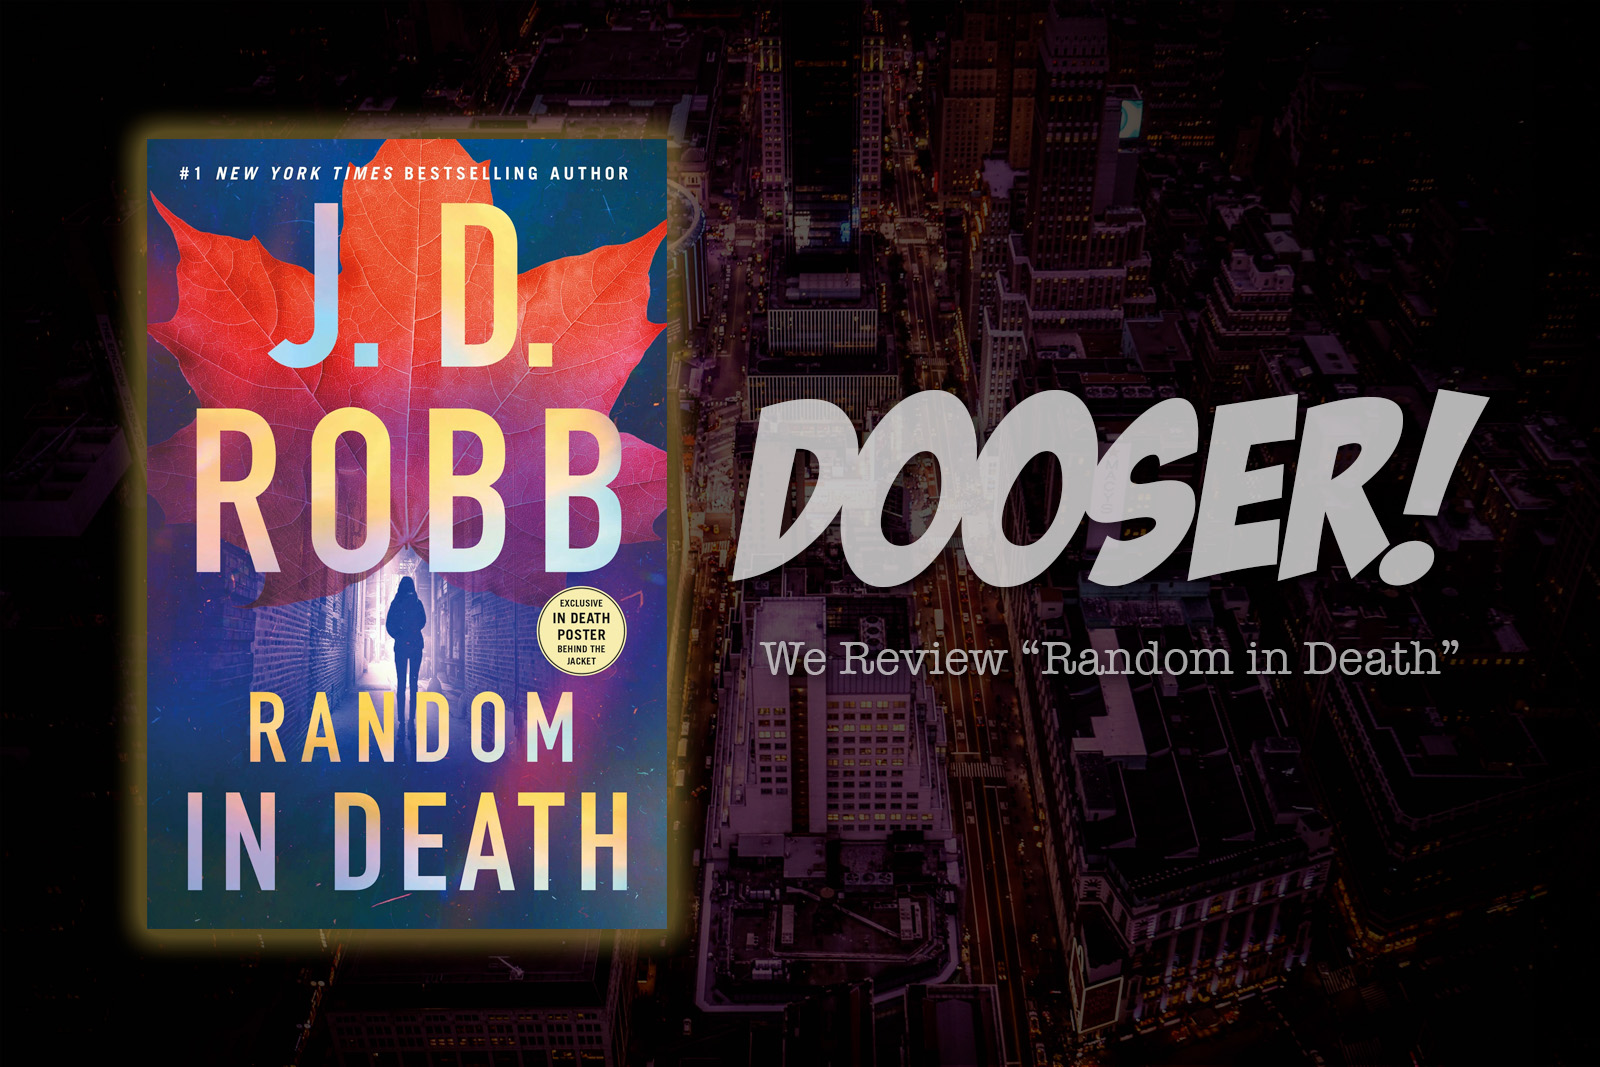 Dooser! – We Review “Random in Death” by J.D. Robb